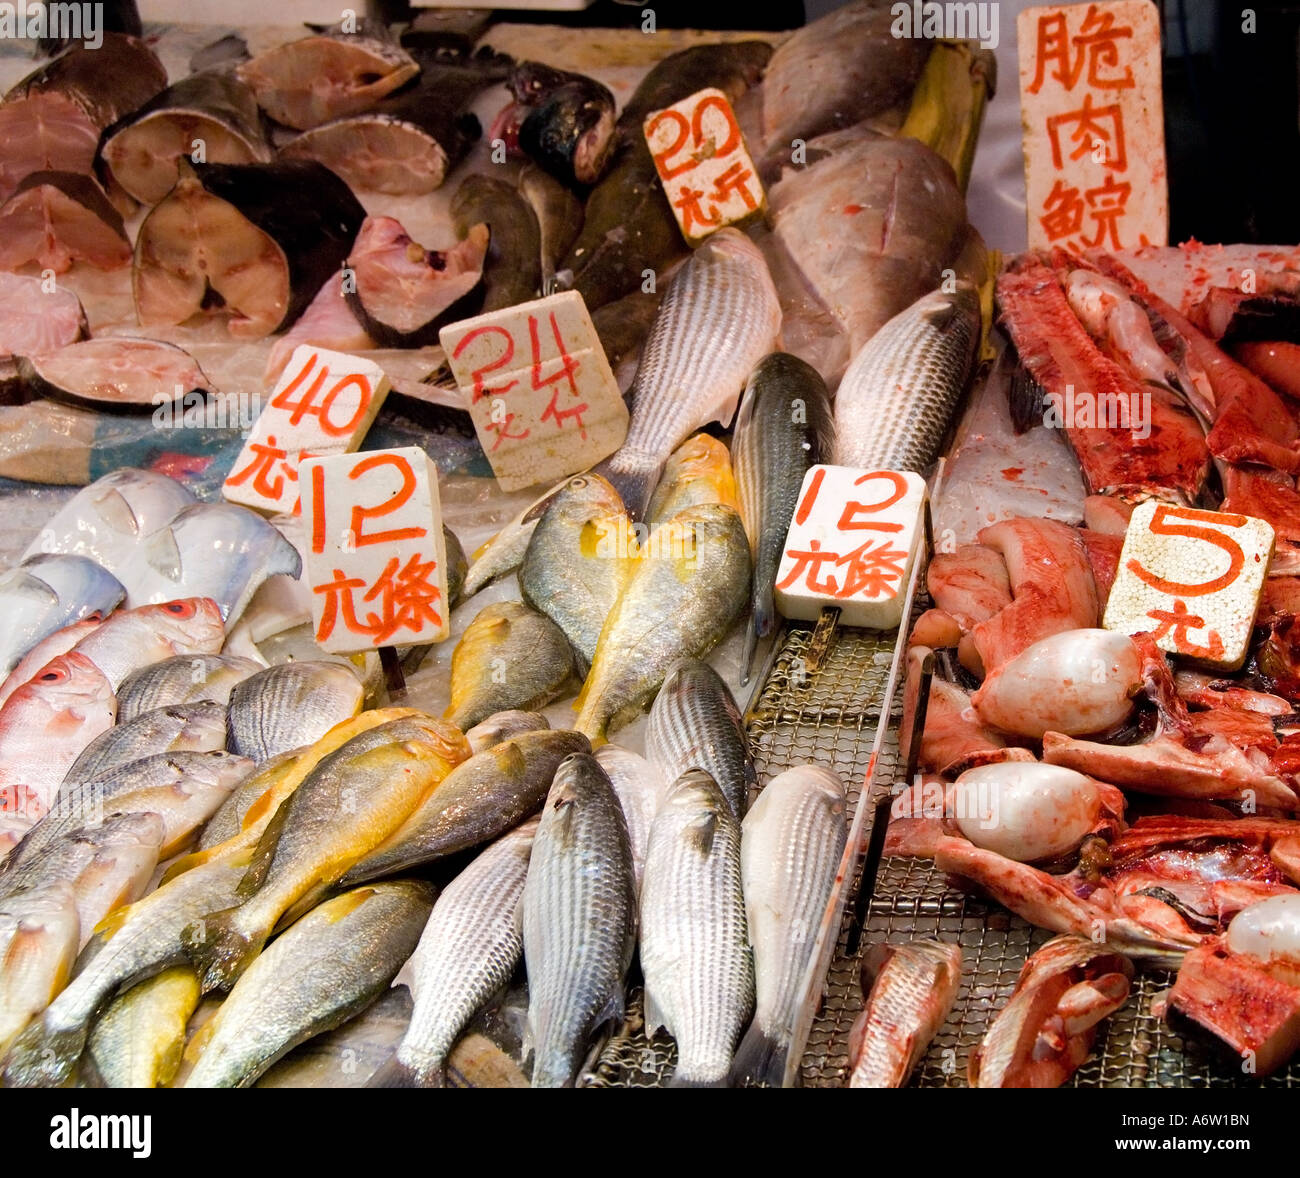 Produce on Fish Market Stall, Wan Chai Market, Hong Kong, China, Asia Stock Photo